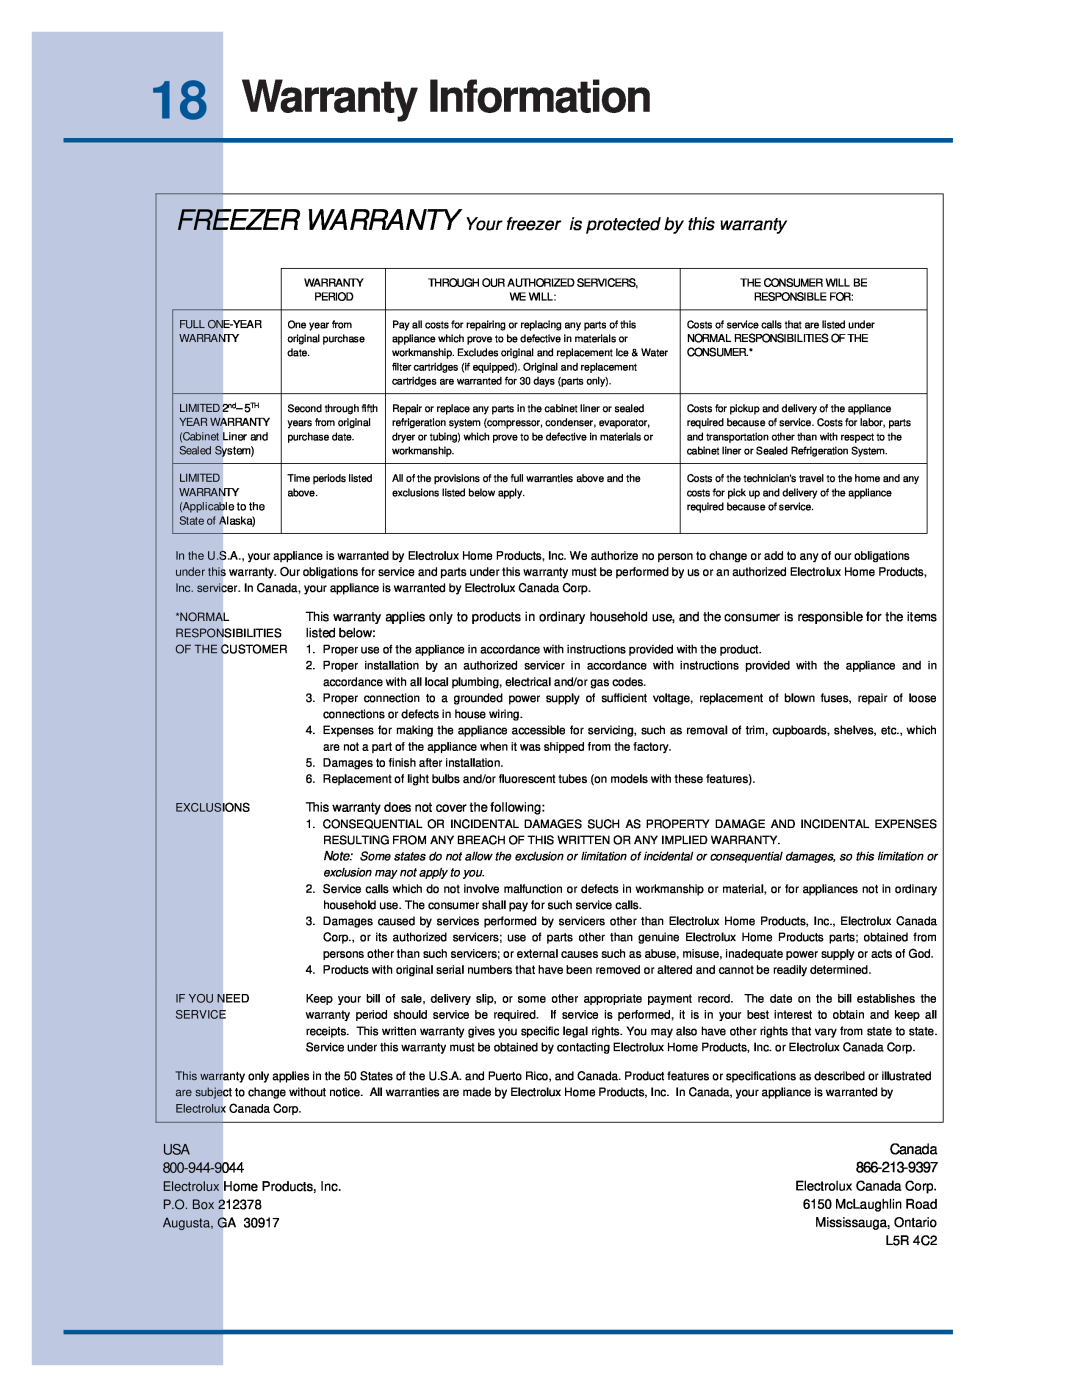 Electrolux 297122900 (0608) Warranty Information, FREEZER WARRANTY Your freezer is protected by this warranty, Canada 